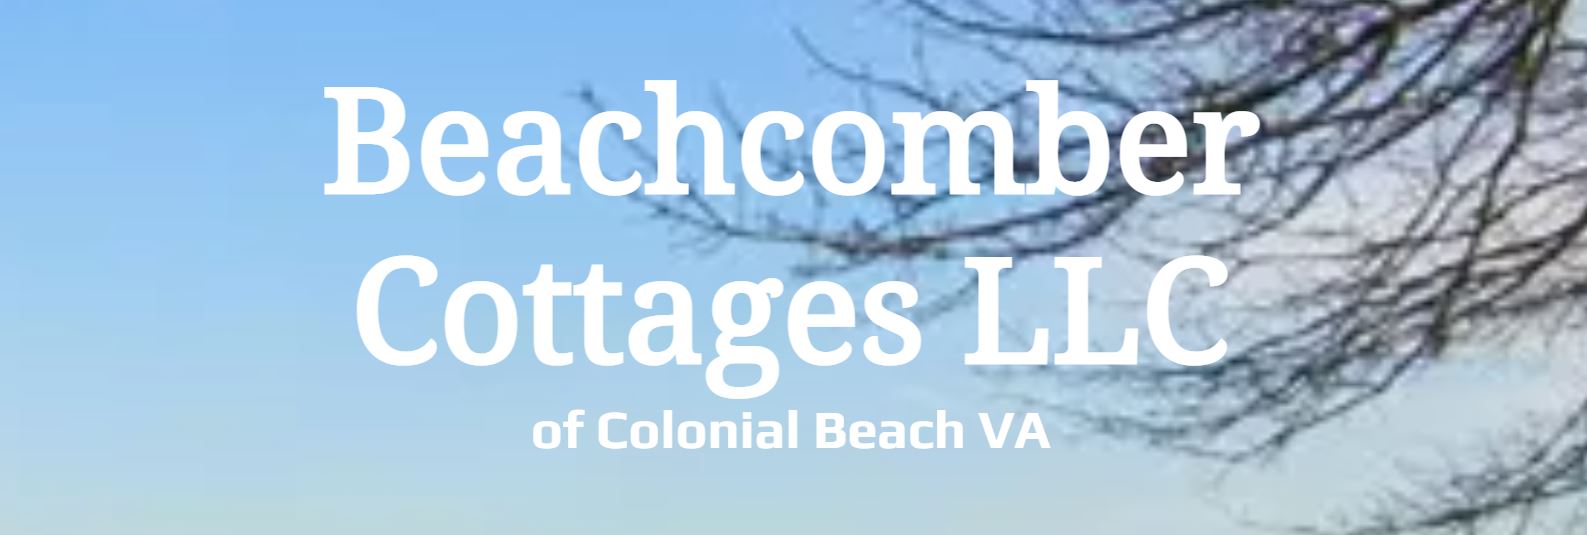 Beachcomber Cottages